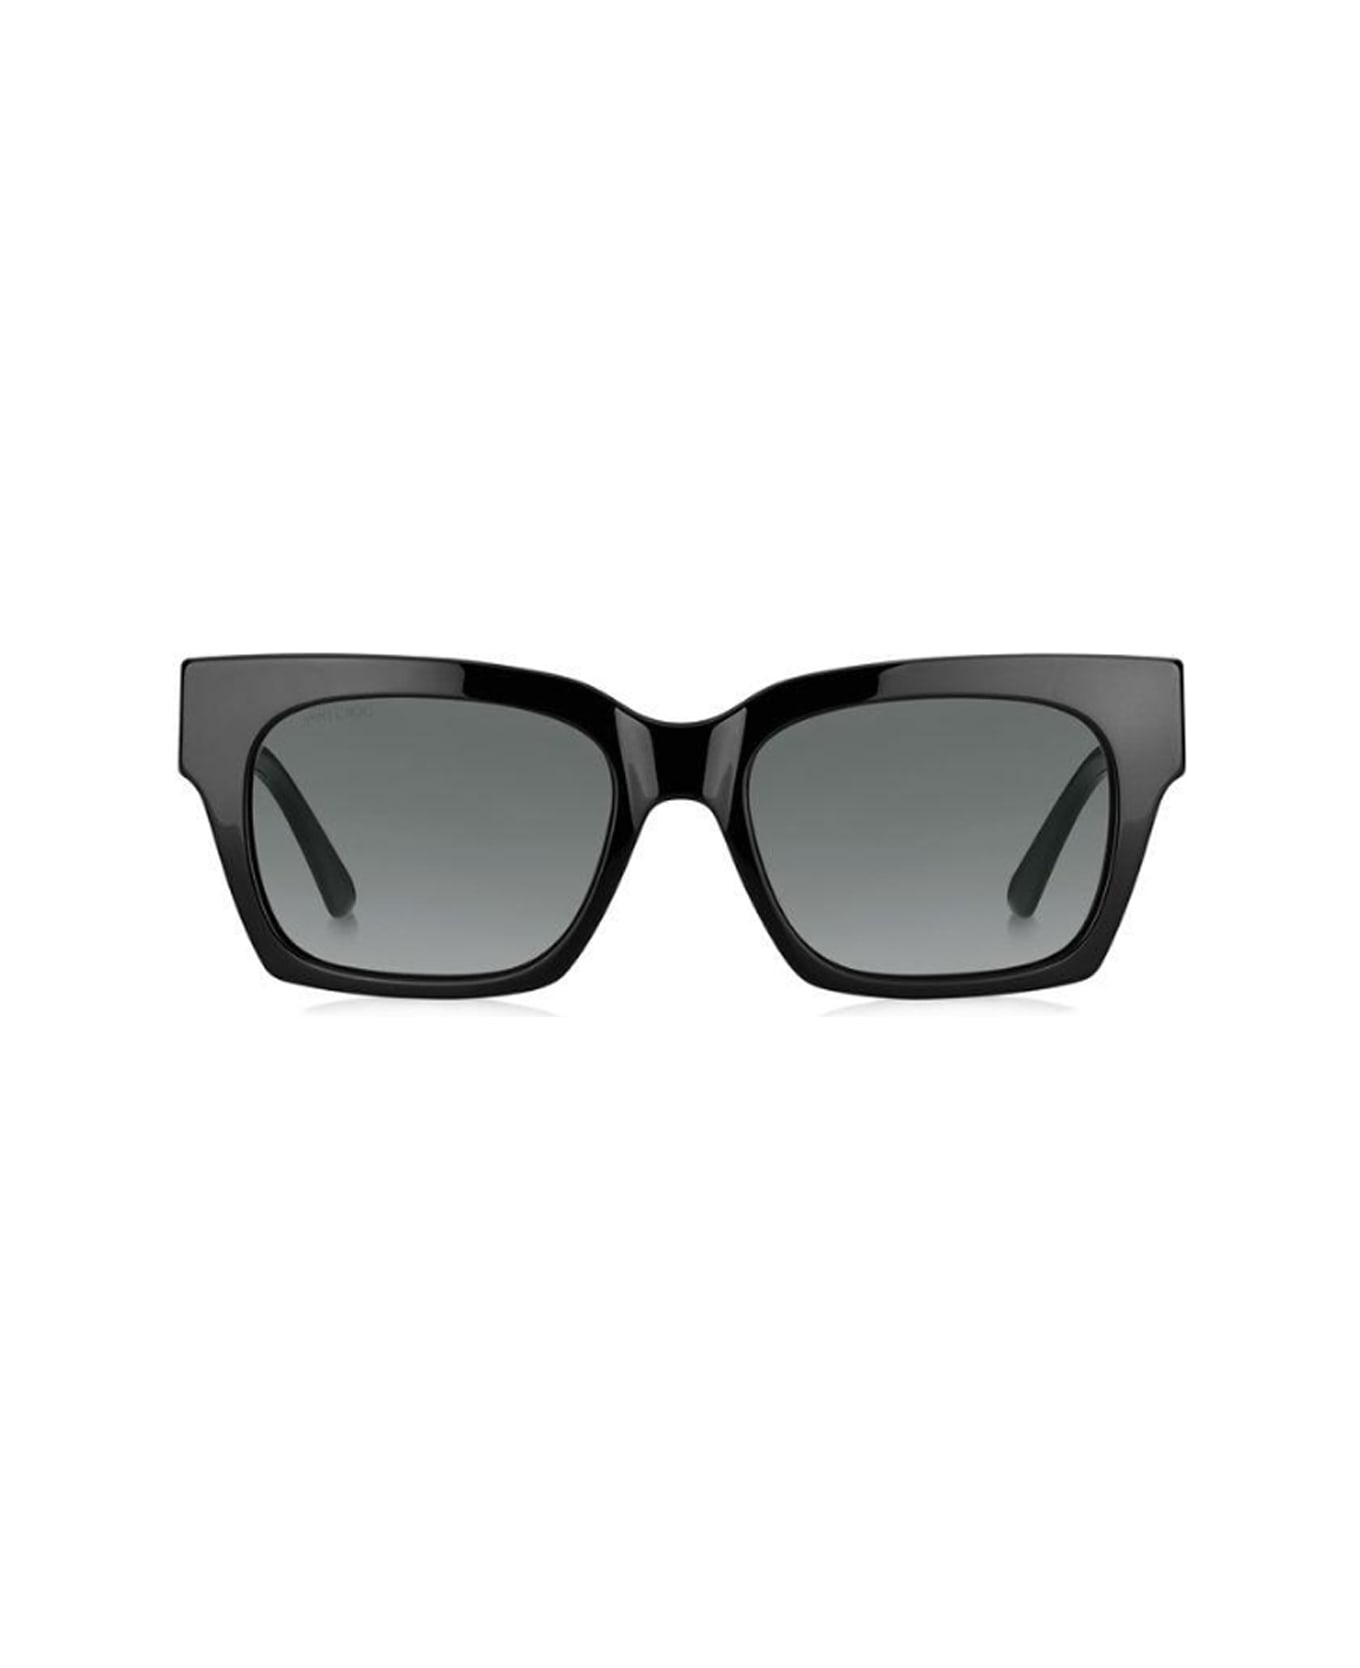 Jimmy Choo Eyewear Jo/s Sunglasses - Nero サングラス